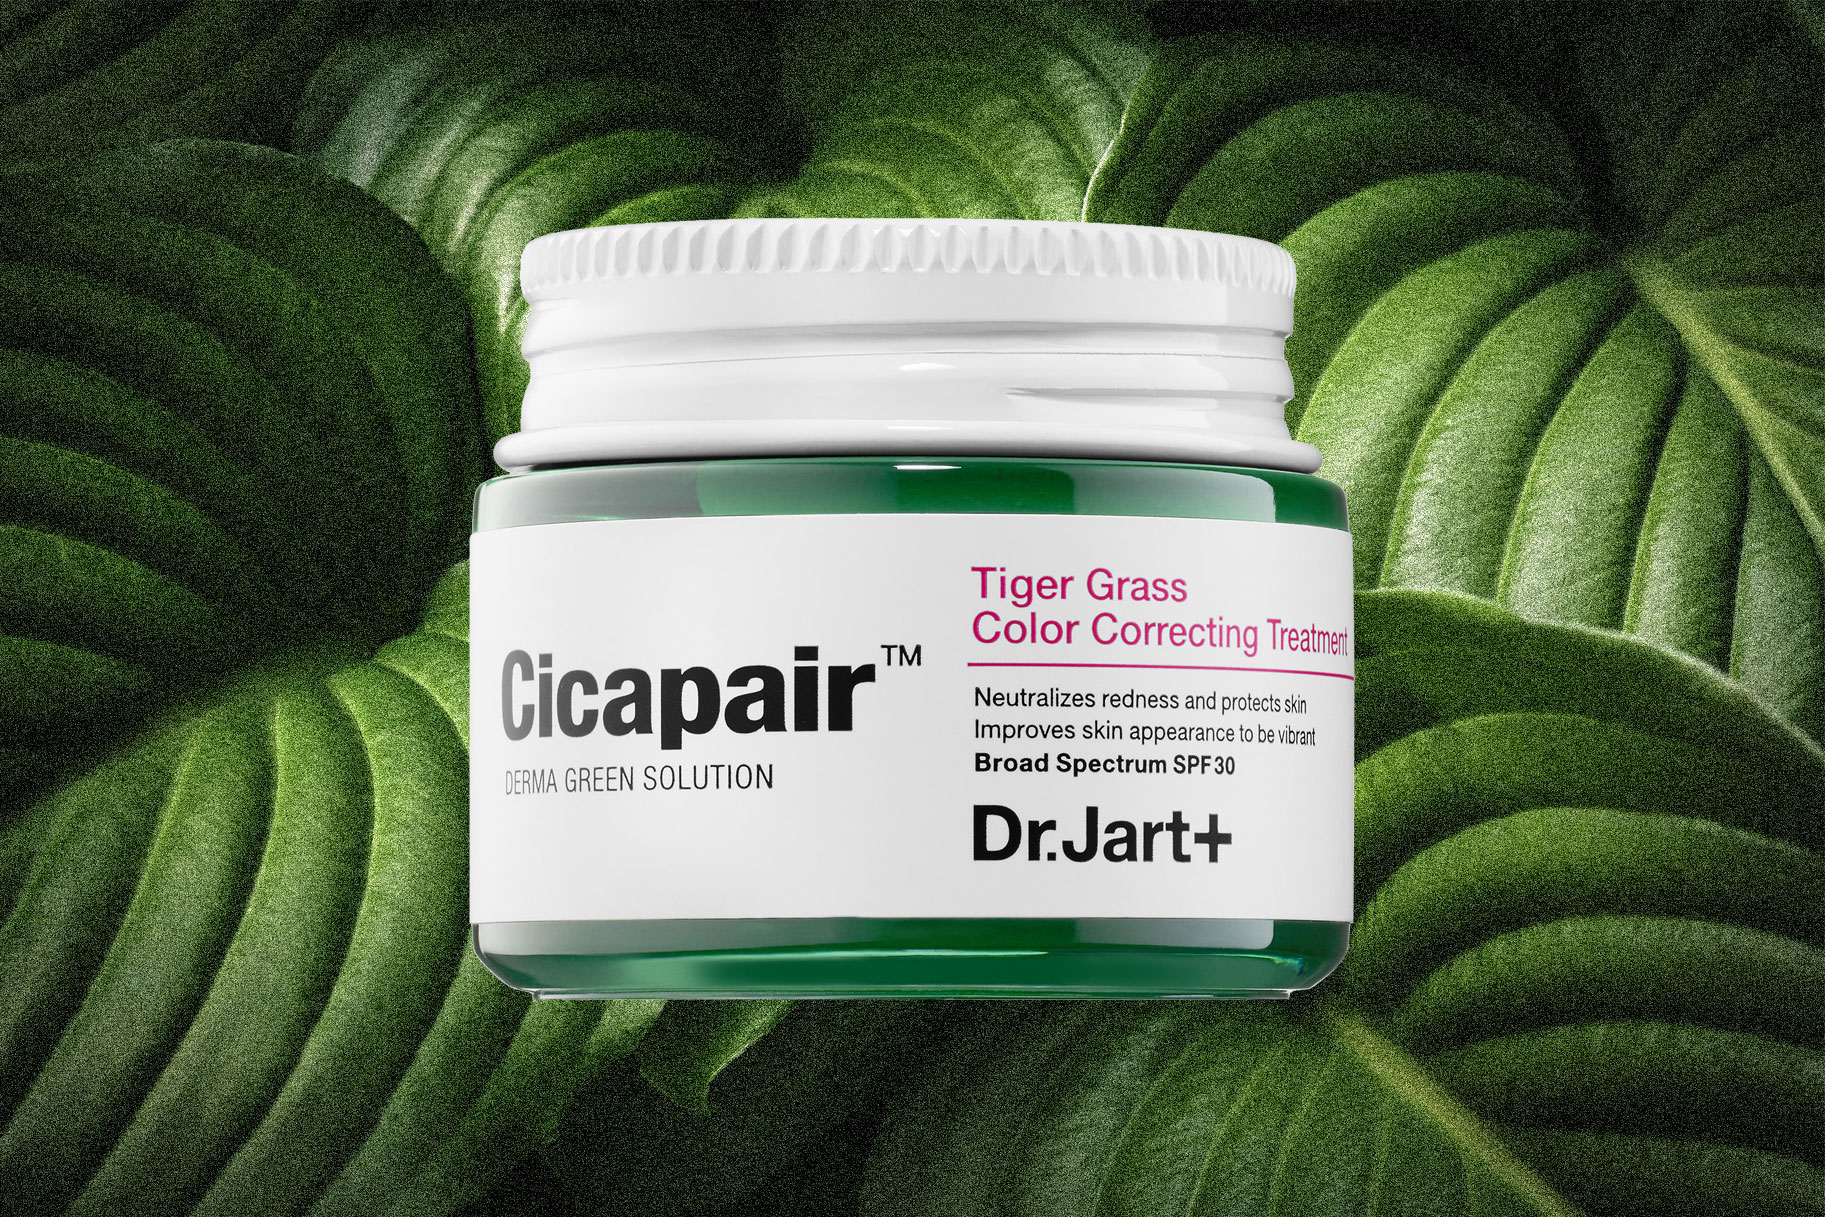 Dr. Jart+ Cicapair Tiger Grass Cream Review: Best Moisturizer for Redness